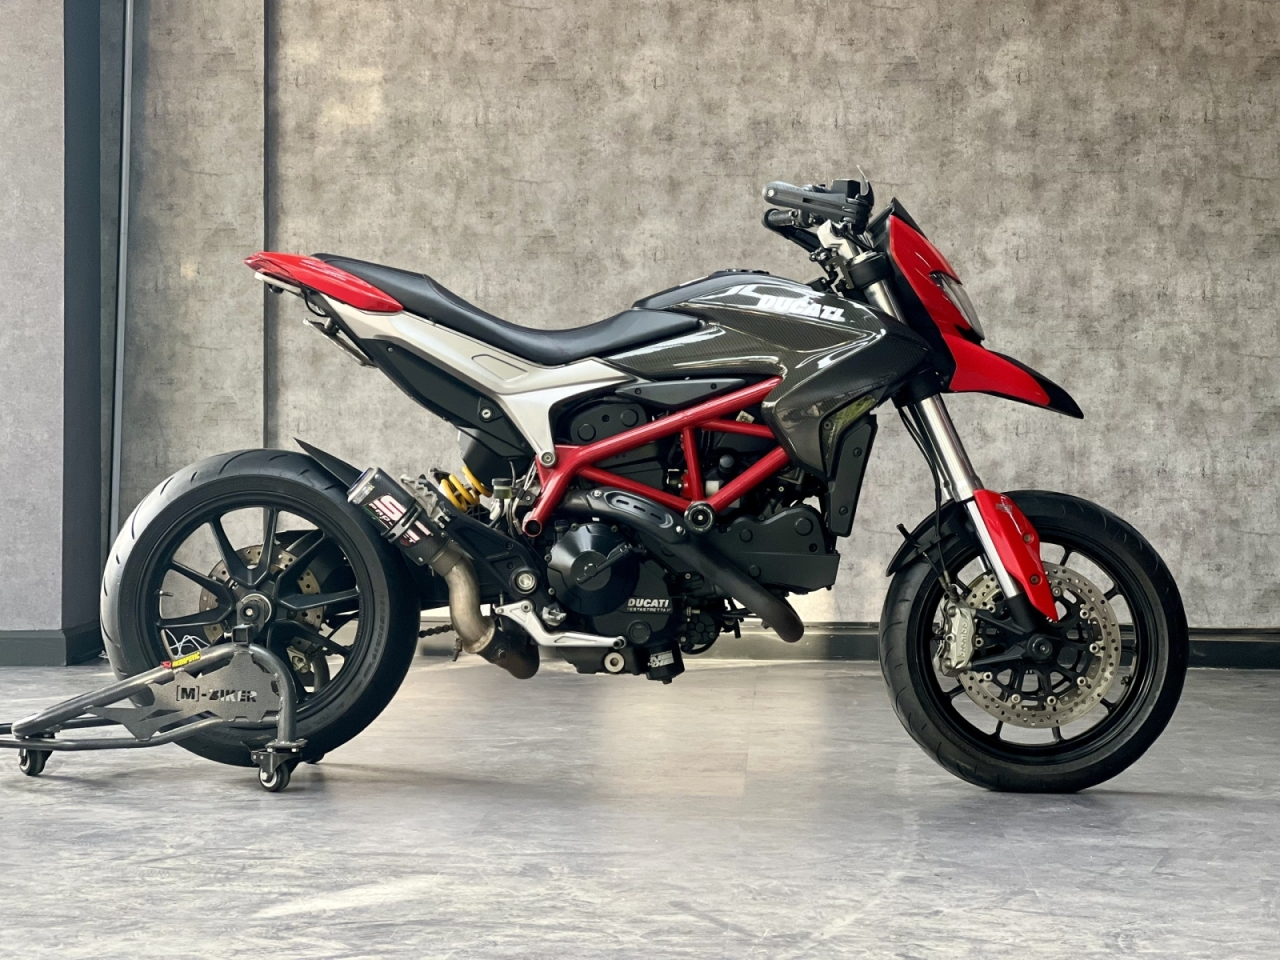 302. Ducati Hypermotard 821 